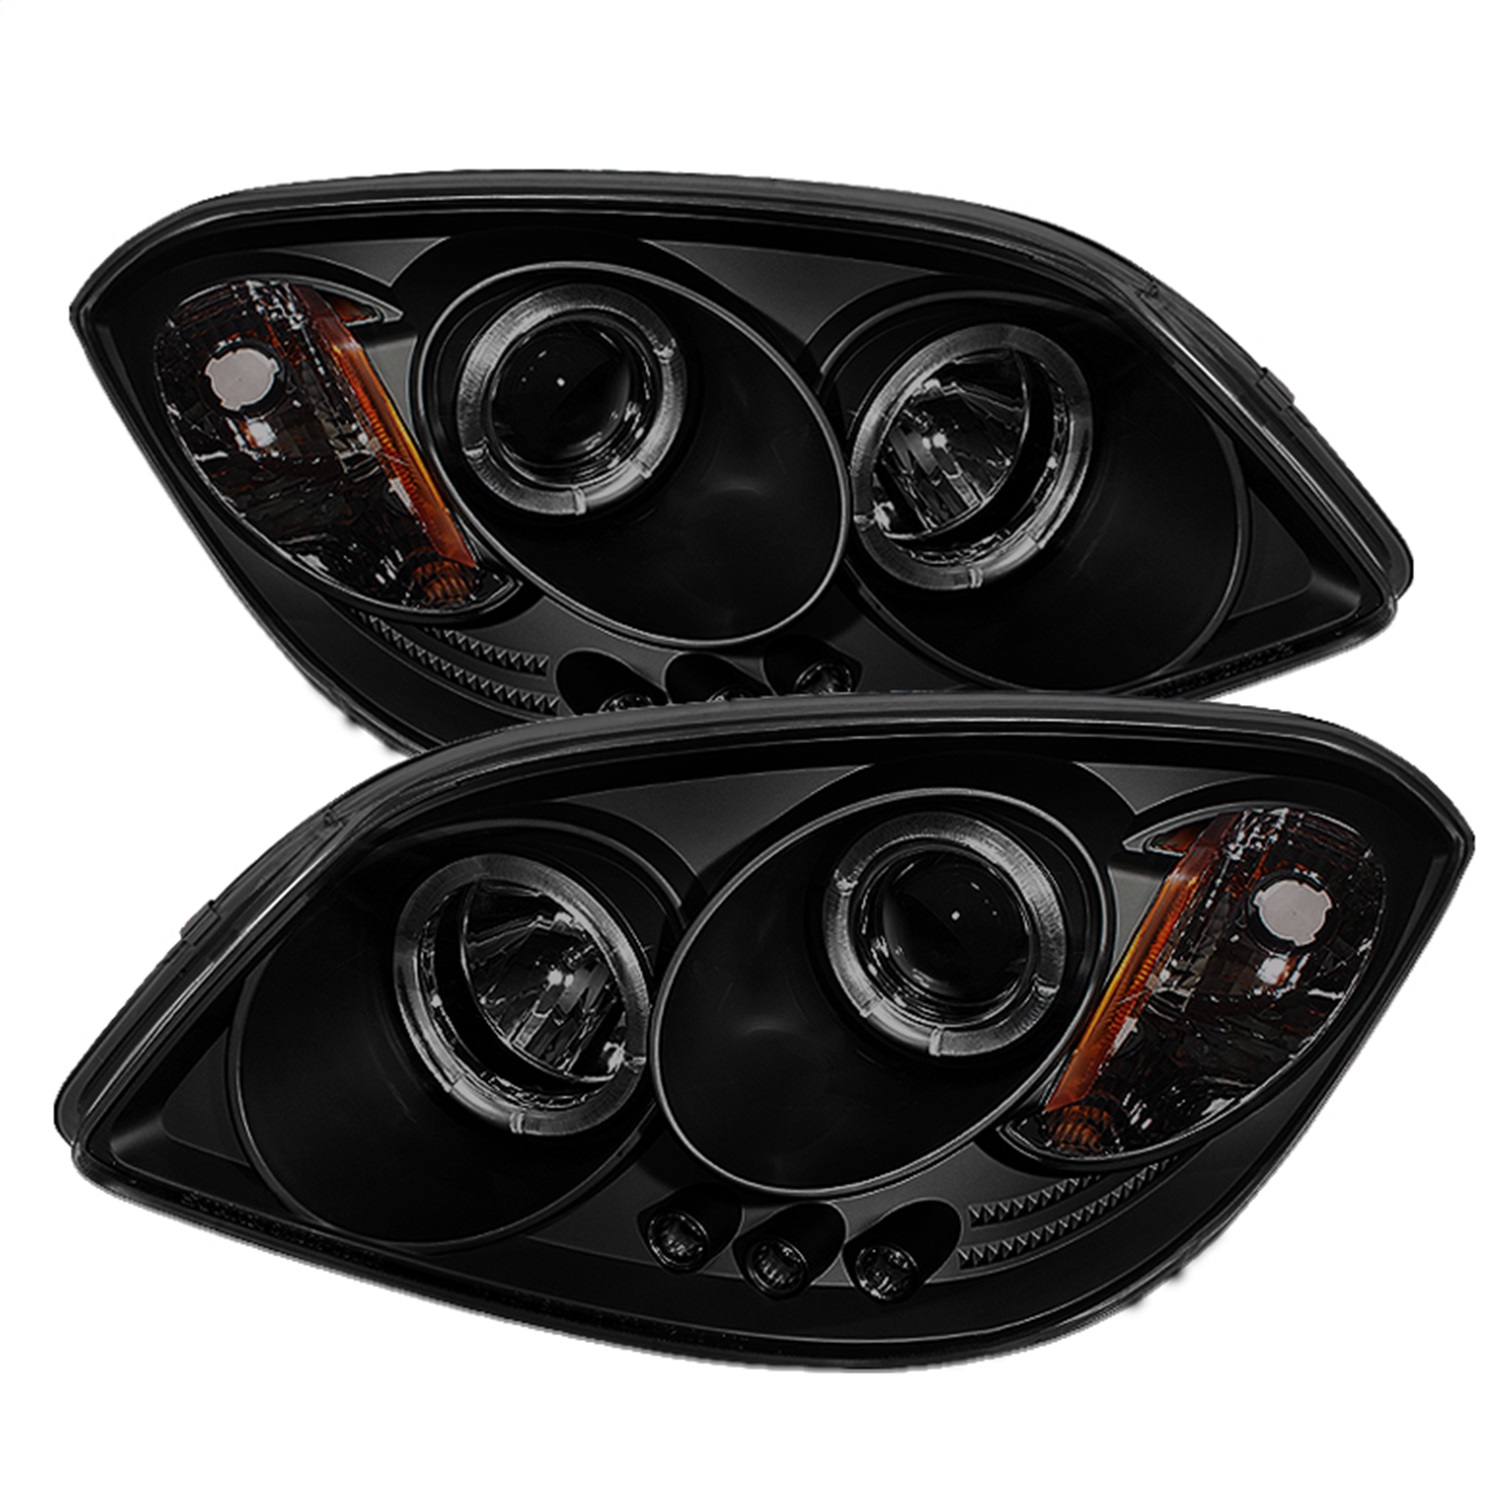 Spyder Auto 5078285 Halo LED Projector Headlights Fits 05-10 Cobalt G5 Pursuit